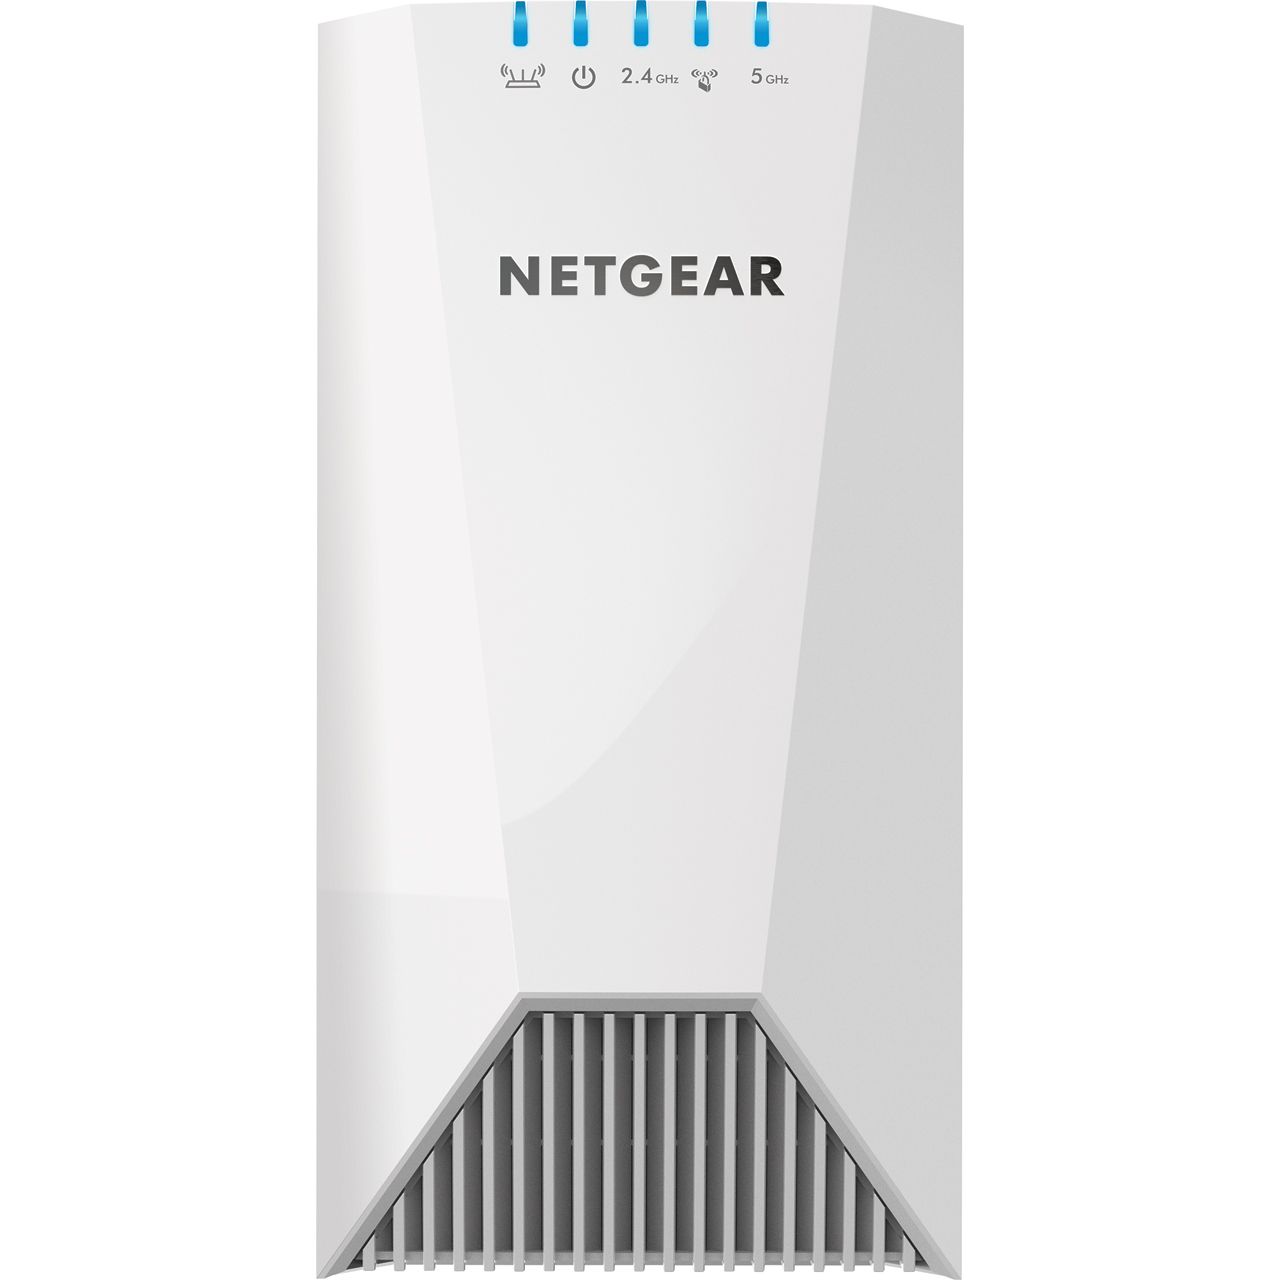 Netgear EX7500 WiFi Range Extender Review